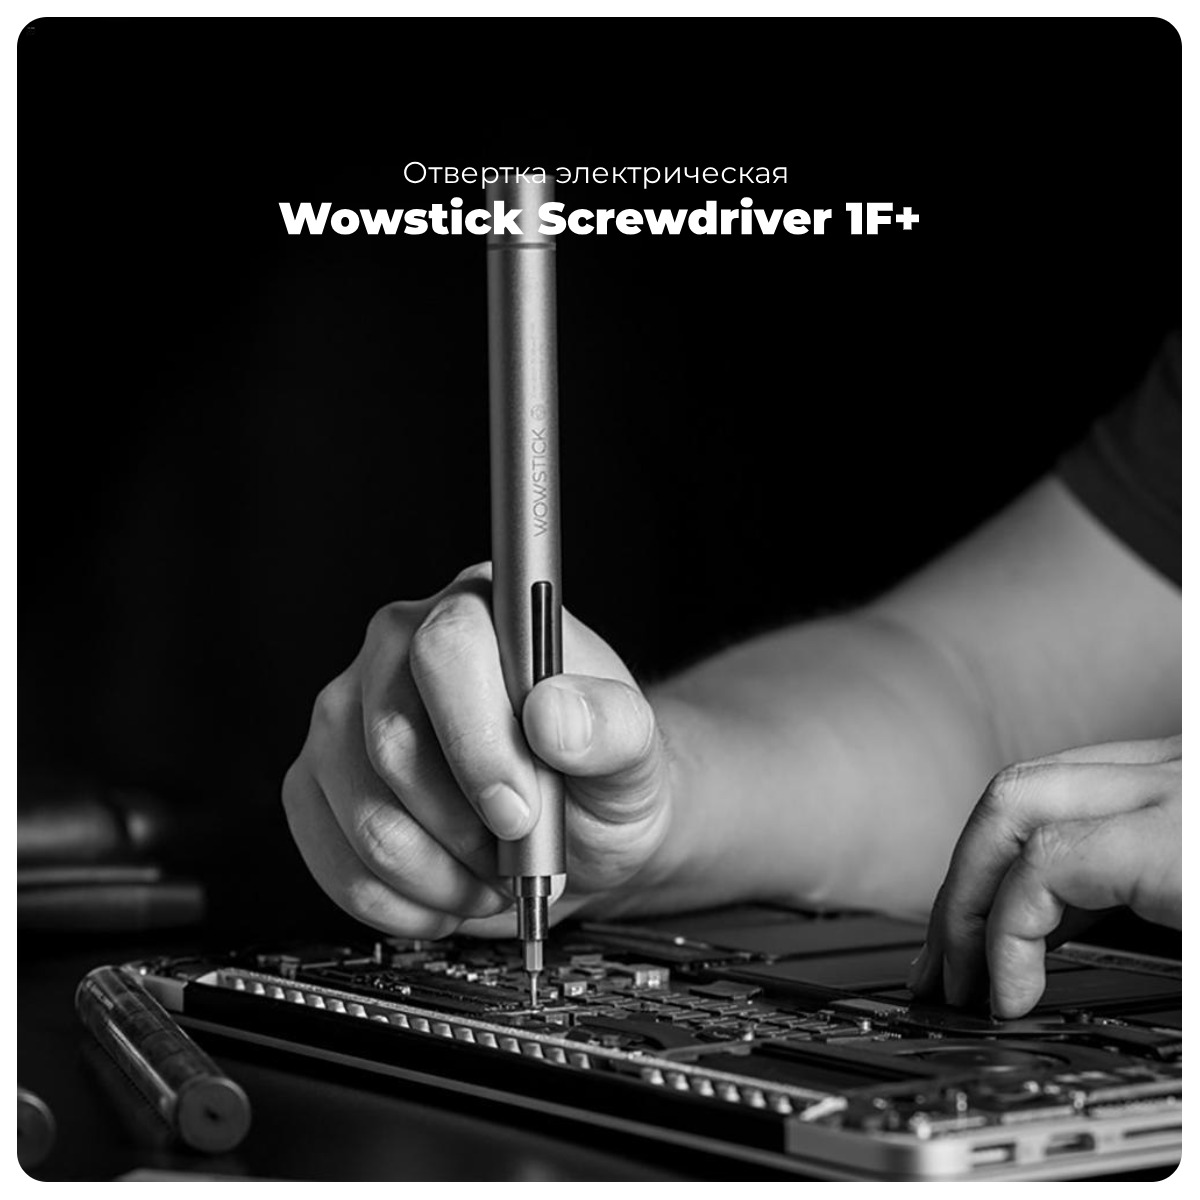 Wowstick-Screwdriver-1F-plus-01